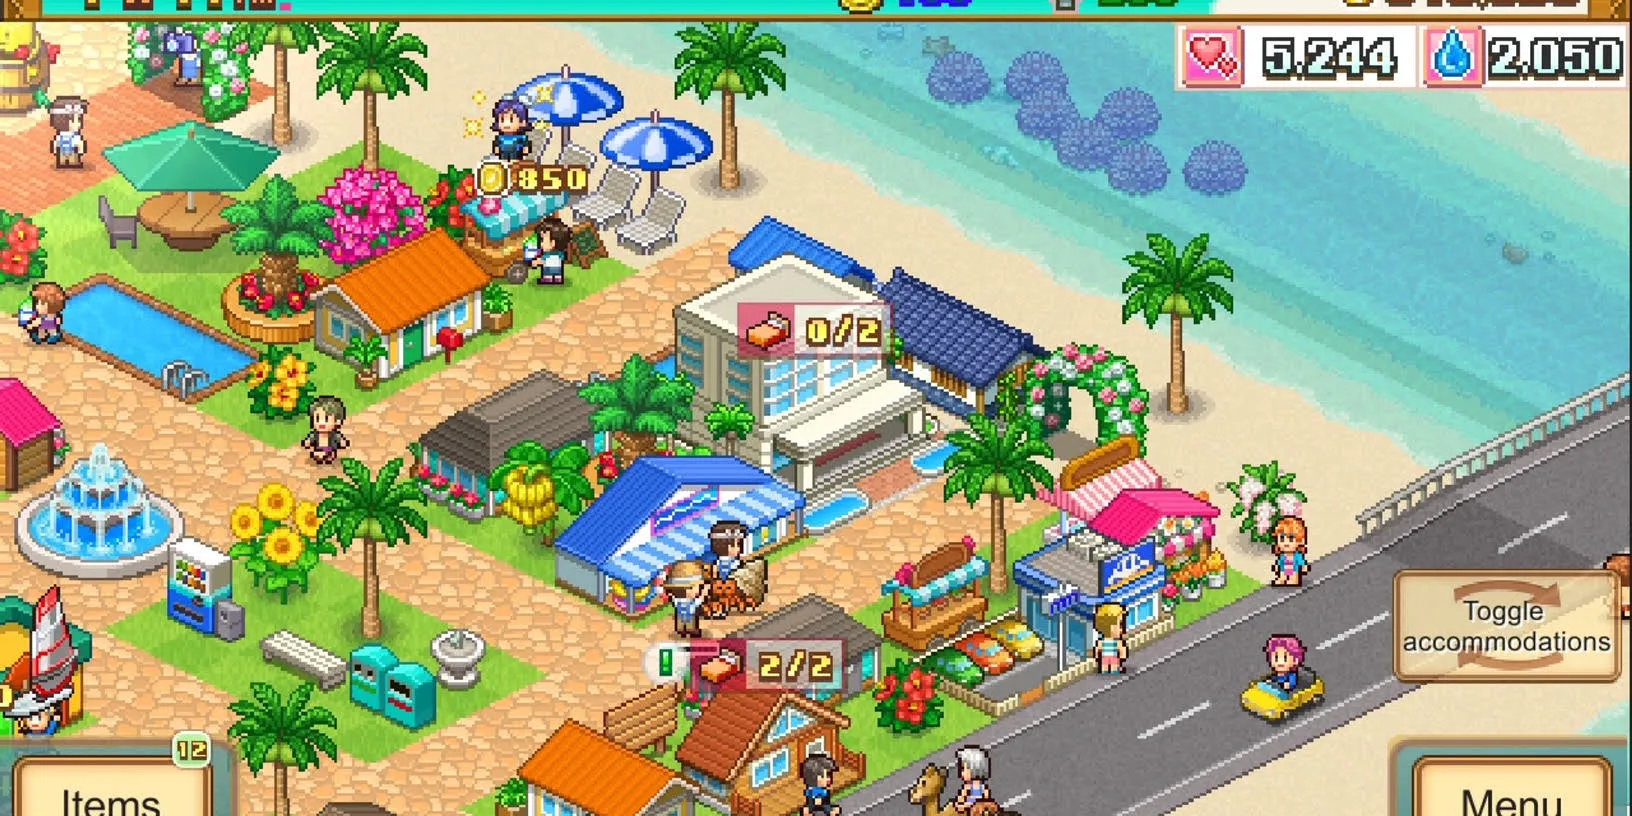 Tropical Resort Story gameplay